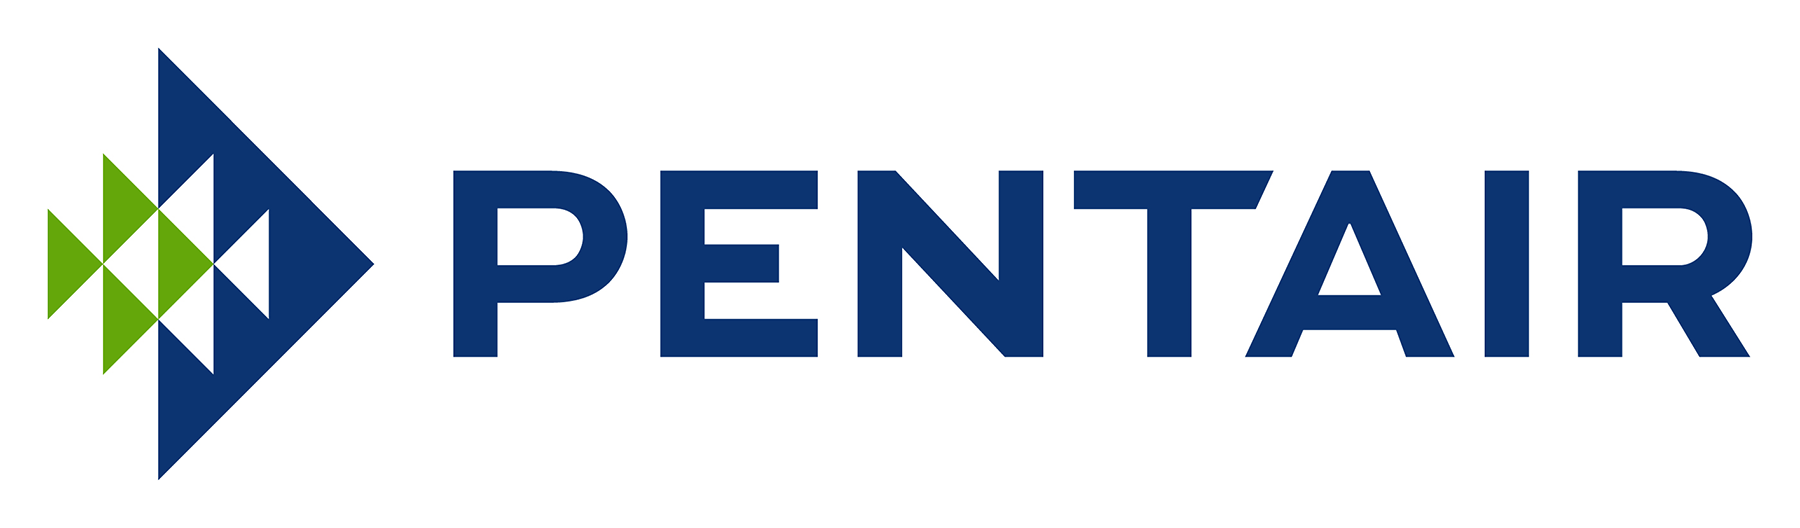 Pentair_Logo.png